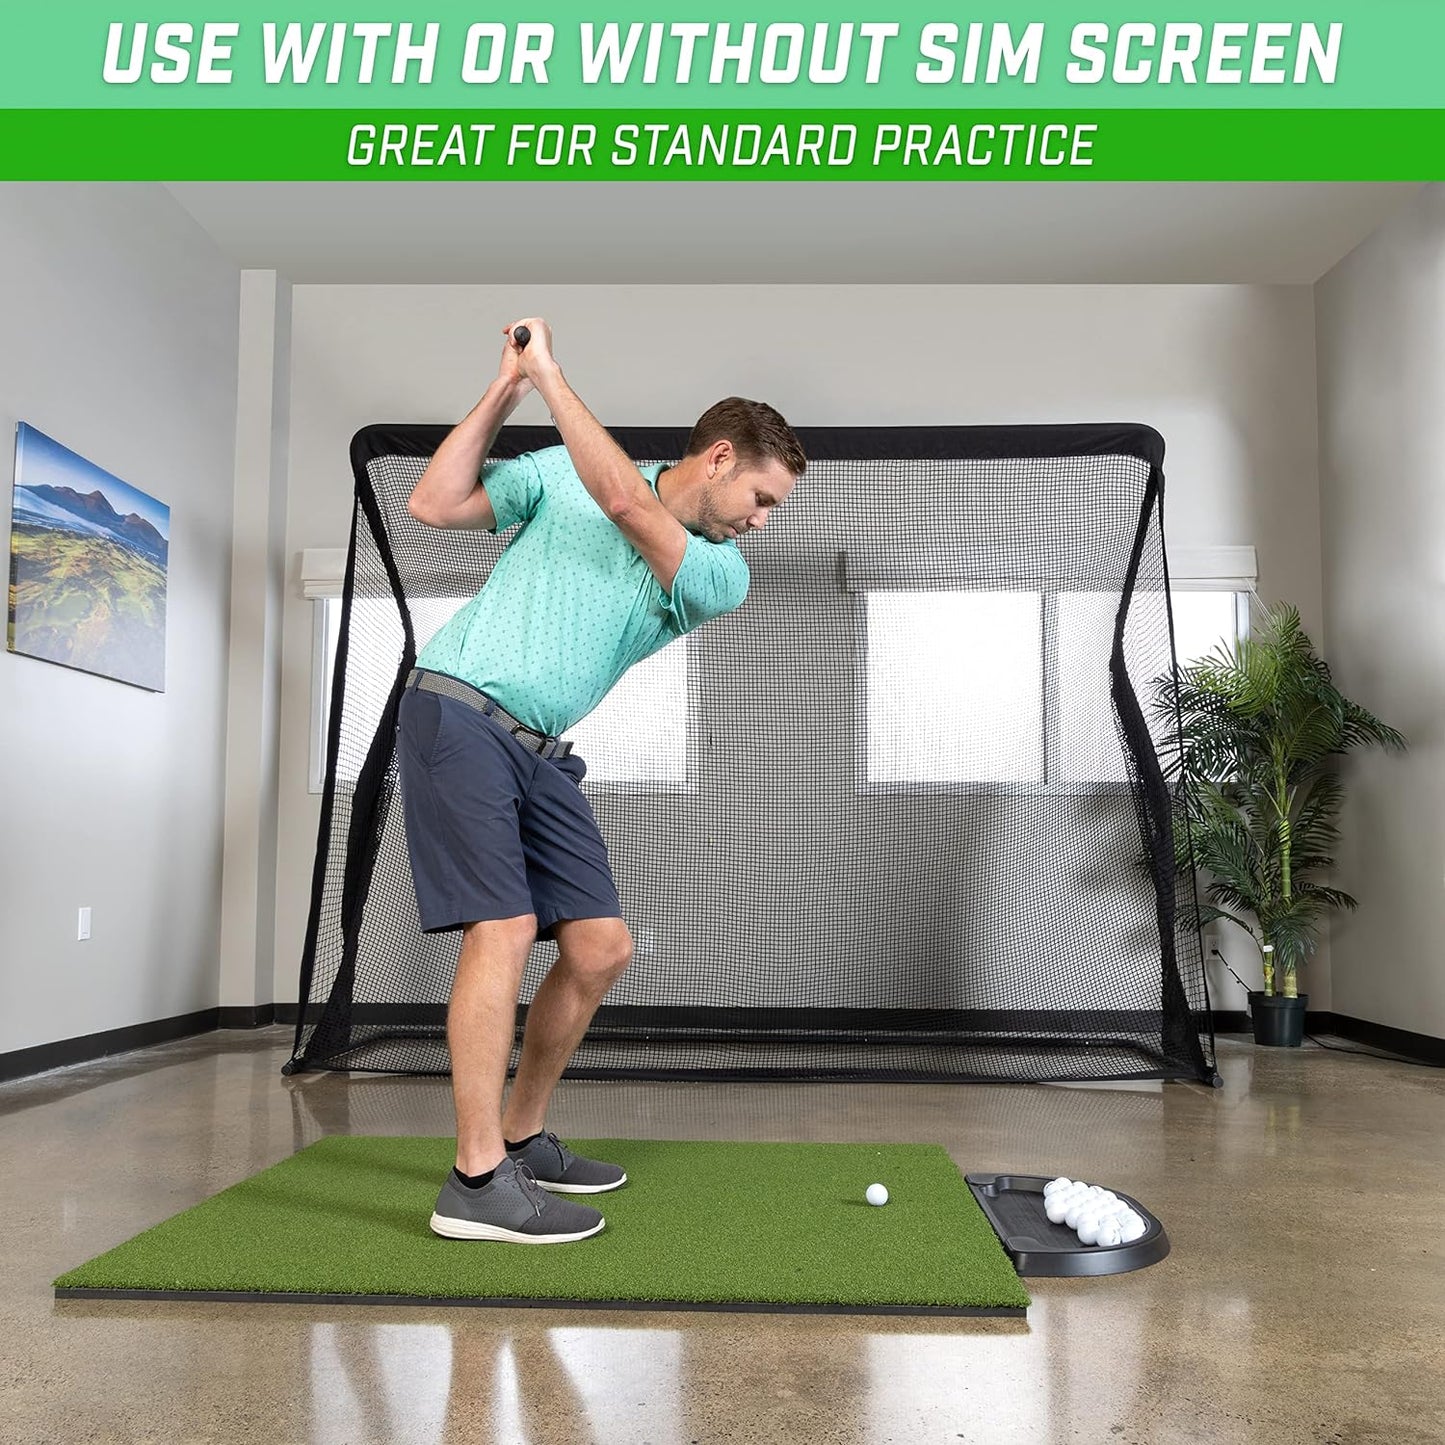 Golf Simulator Practice Bundle - Choose 10' or 7' Size